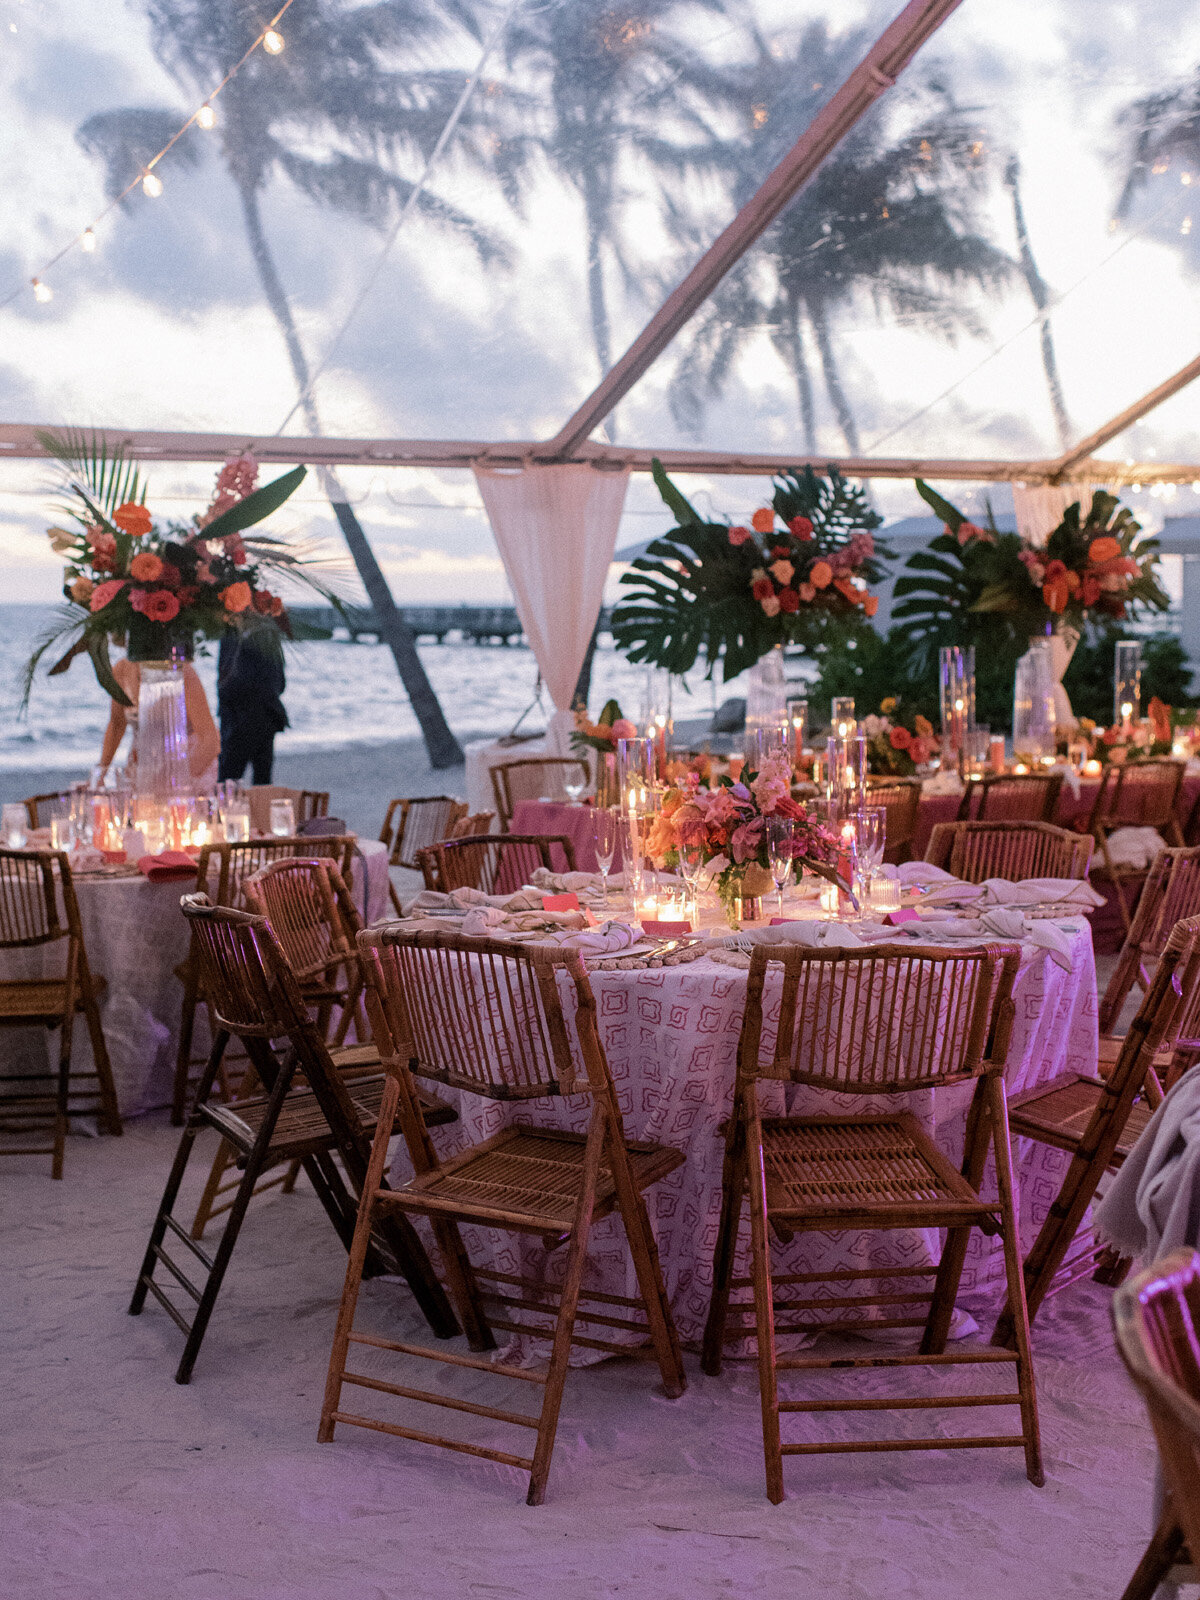 Kate-Murtaugh-Events-tropical-destination-wedding-planner-sunset-candlelight-tent